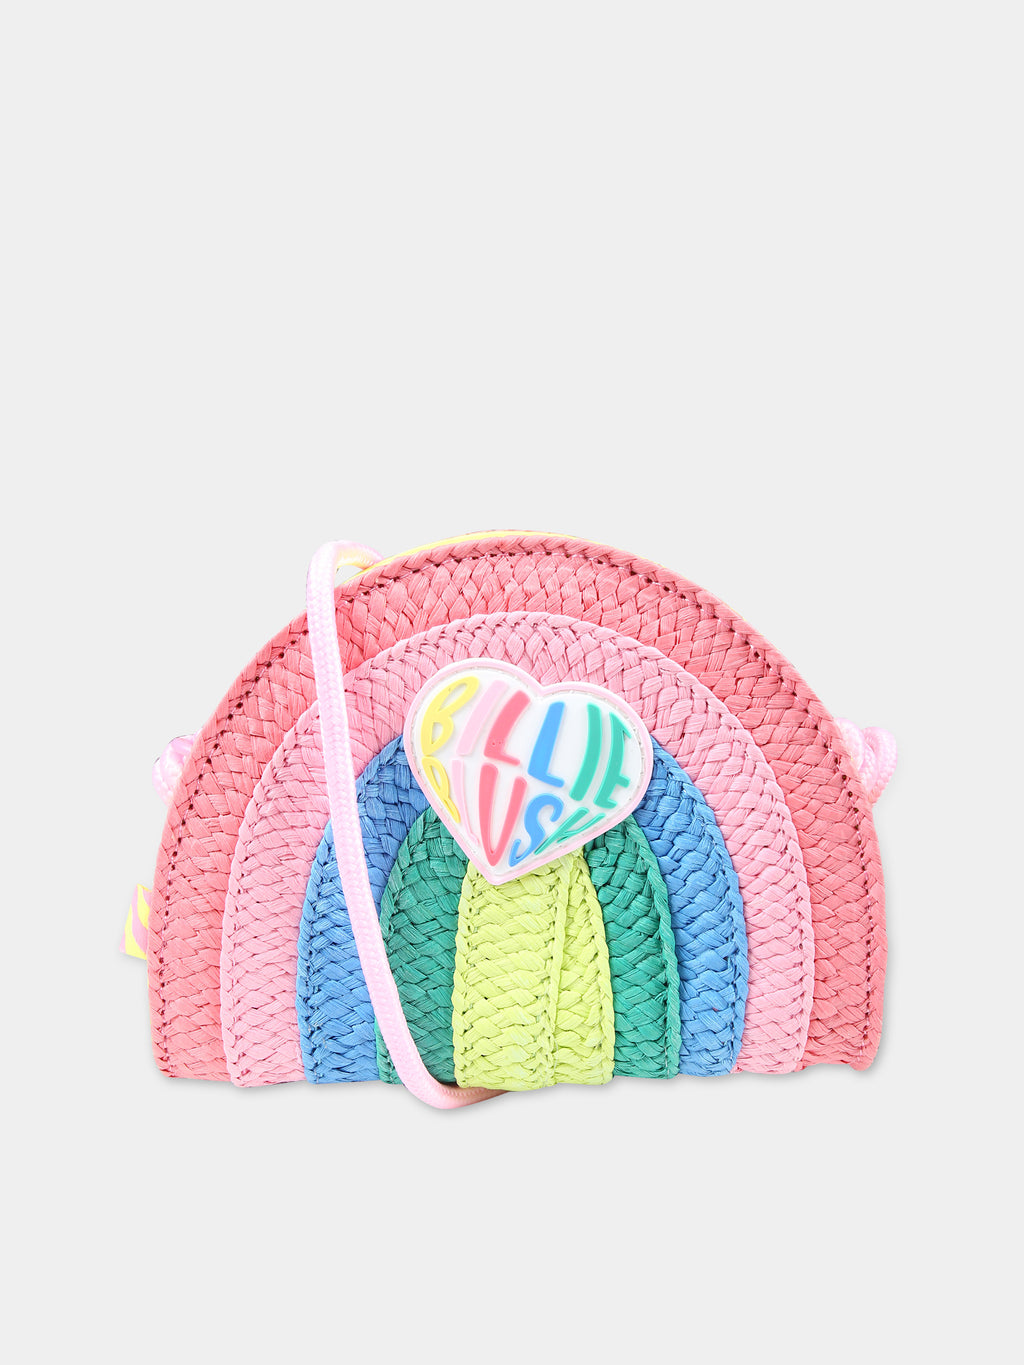 Borsa casual multicolor per bambina a forma di arcobaleno